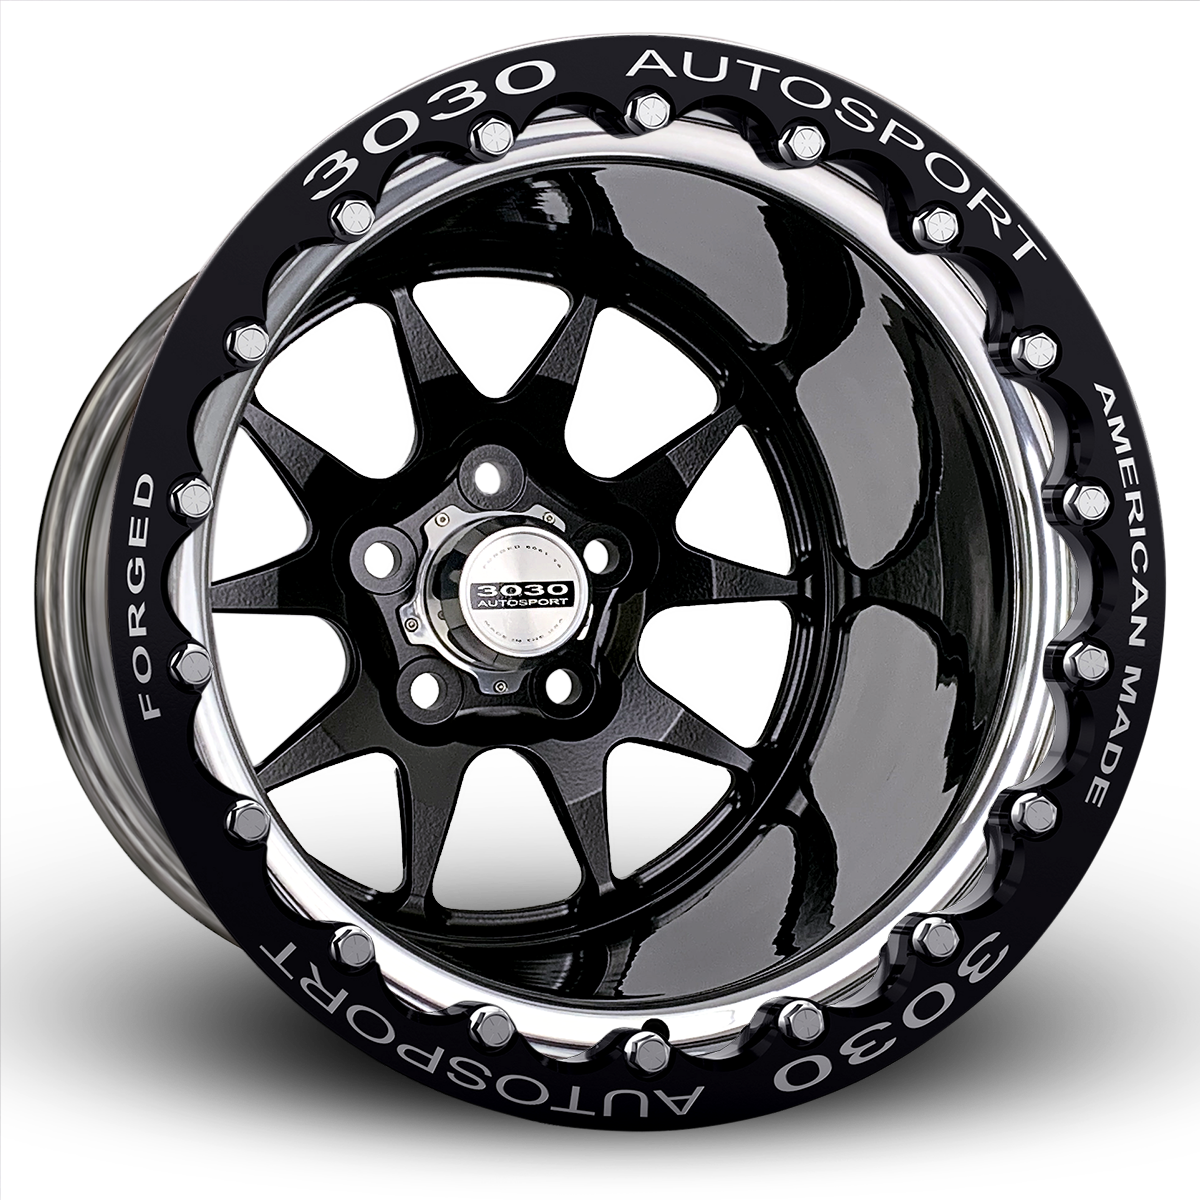 MACH-10 Double-Beadlock Wheel, Size: 15x9", Bolt Pattern: 5x5", Backspace: 4" [Black/Polished]